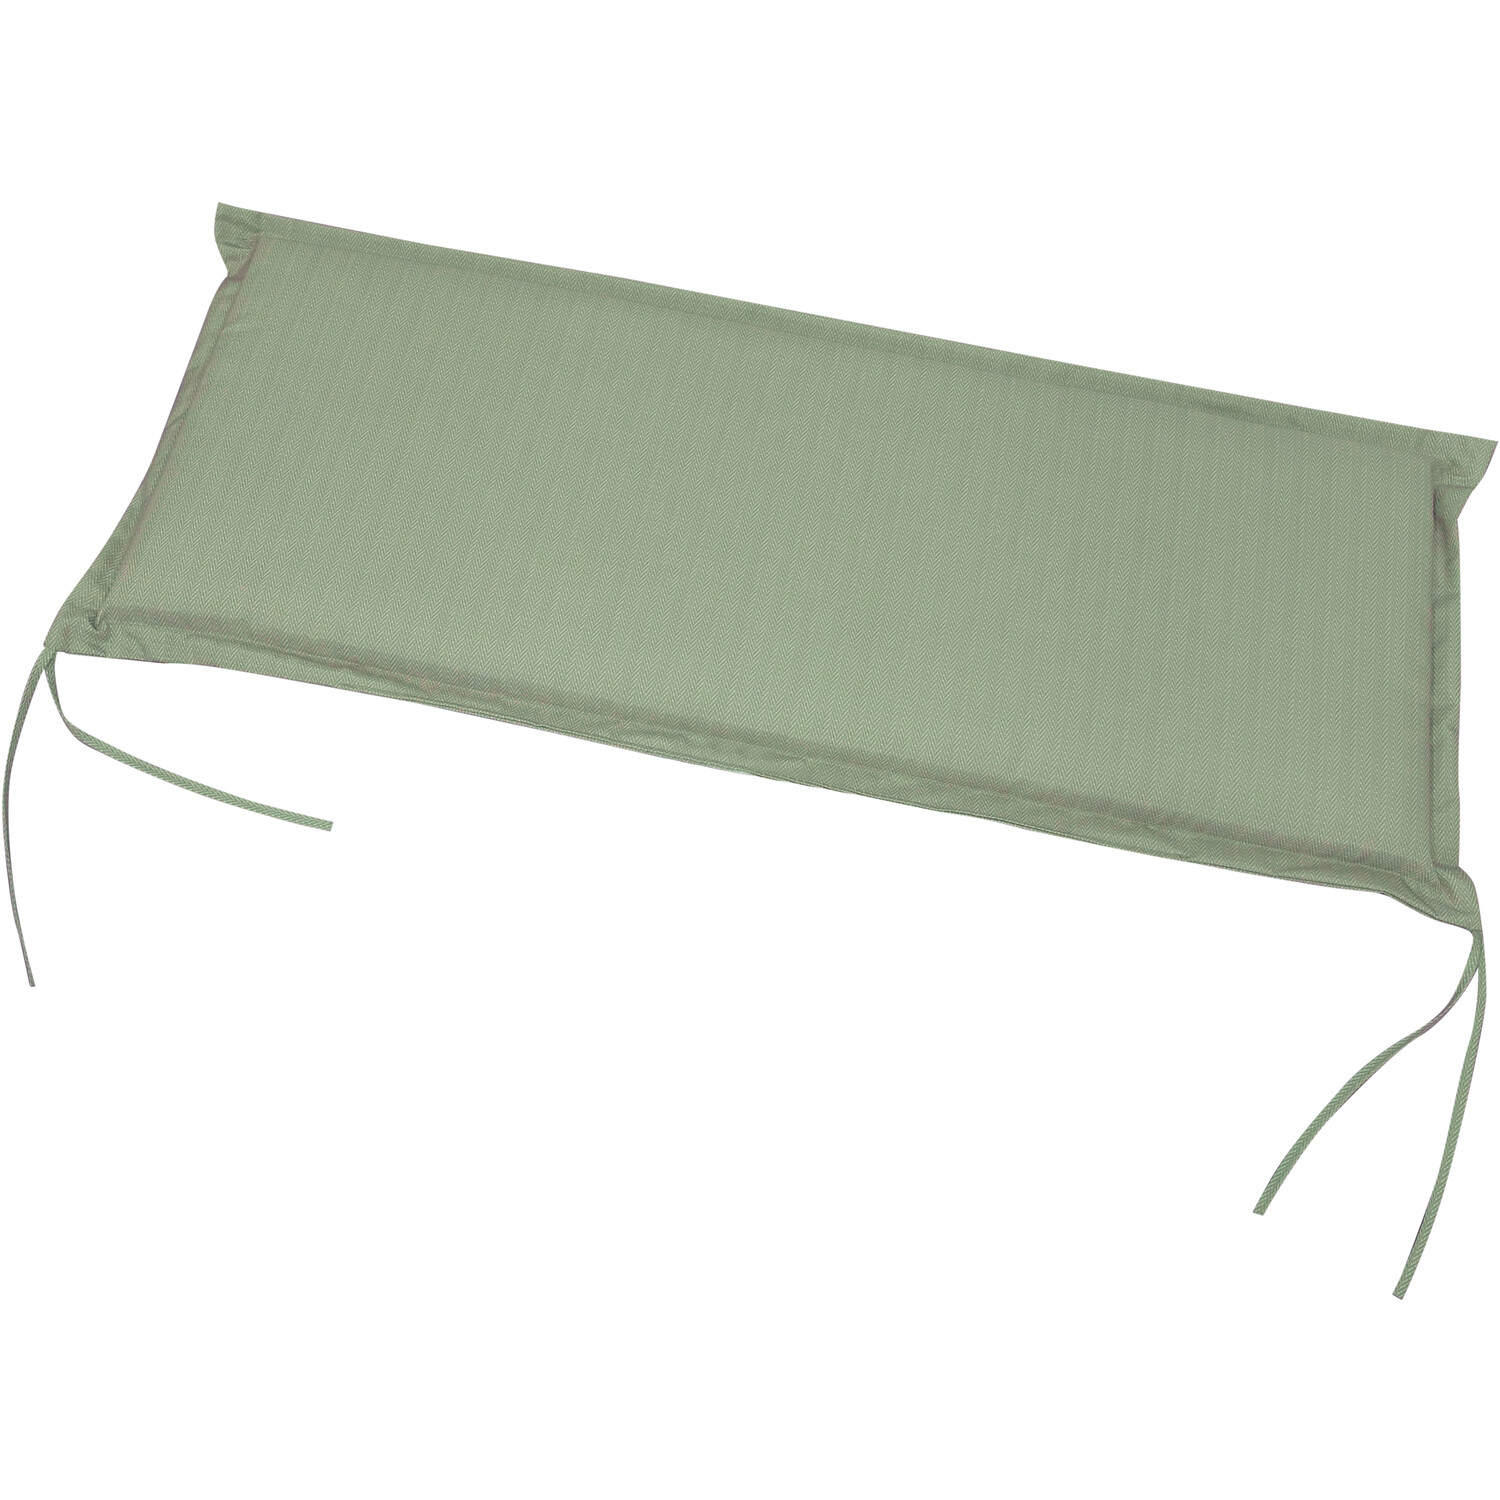 Malay Bench Cushion - Green / 2 Seater Bench Image